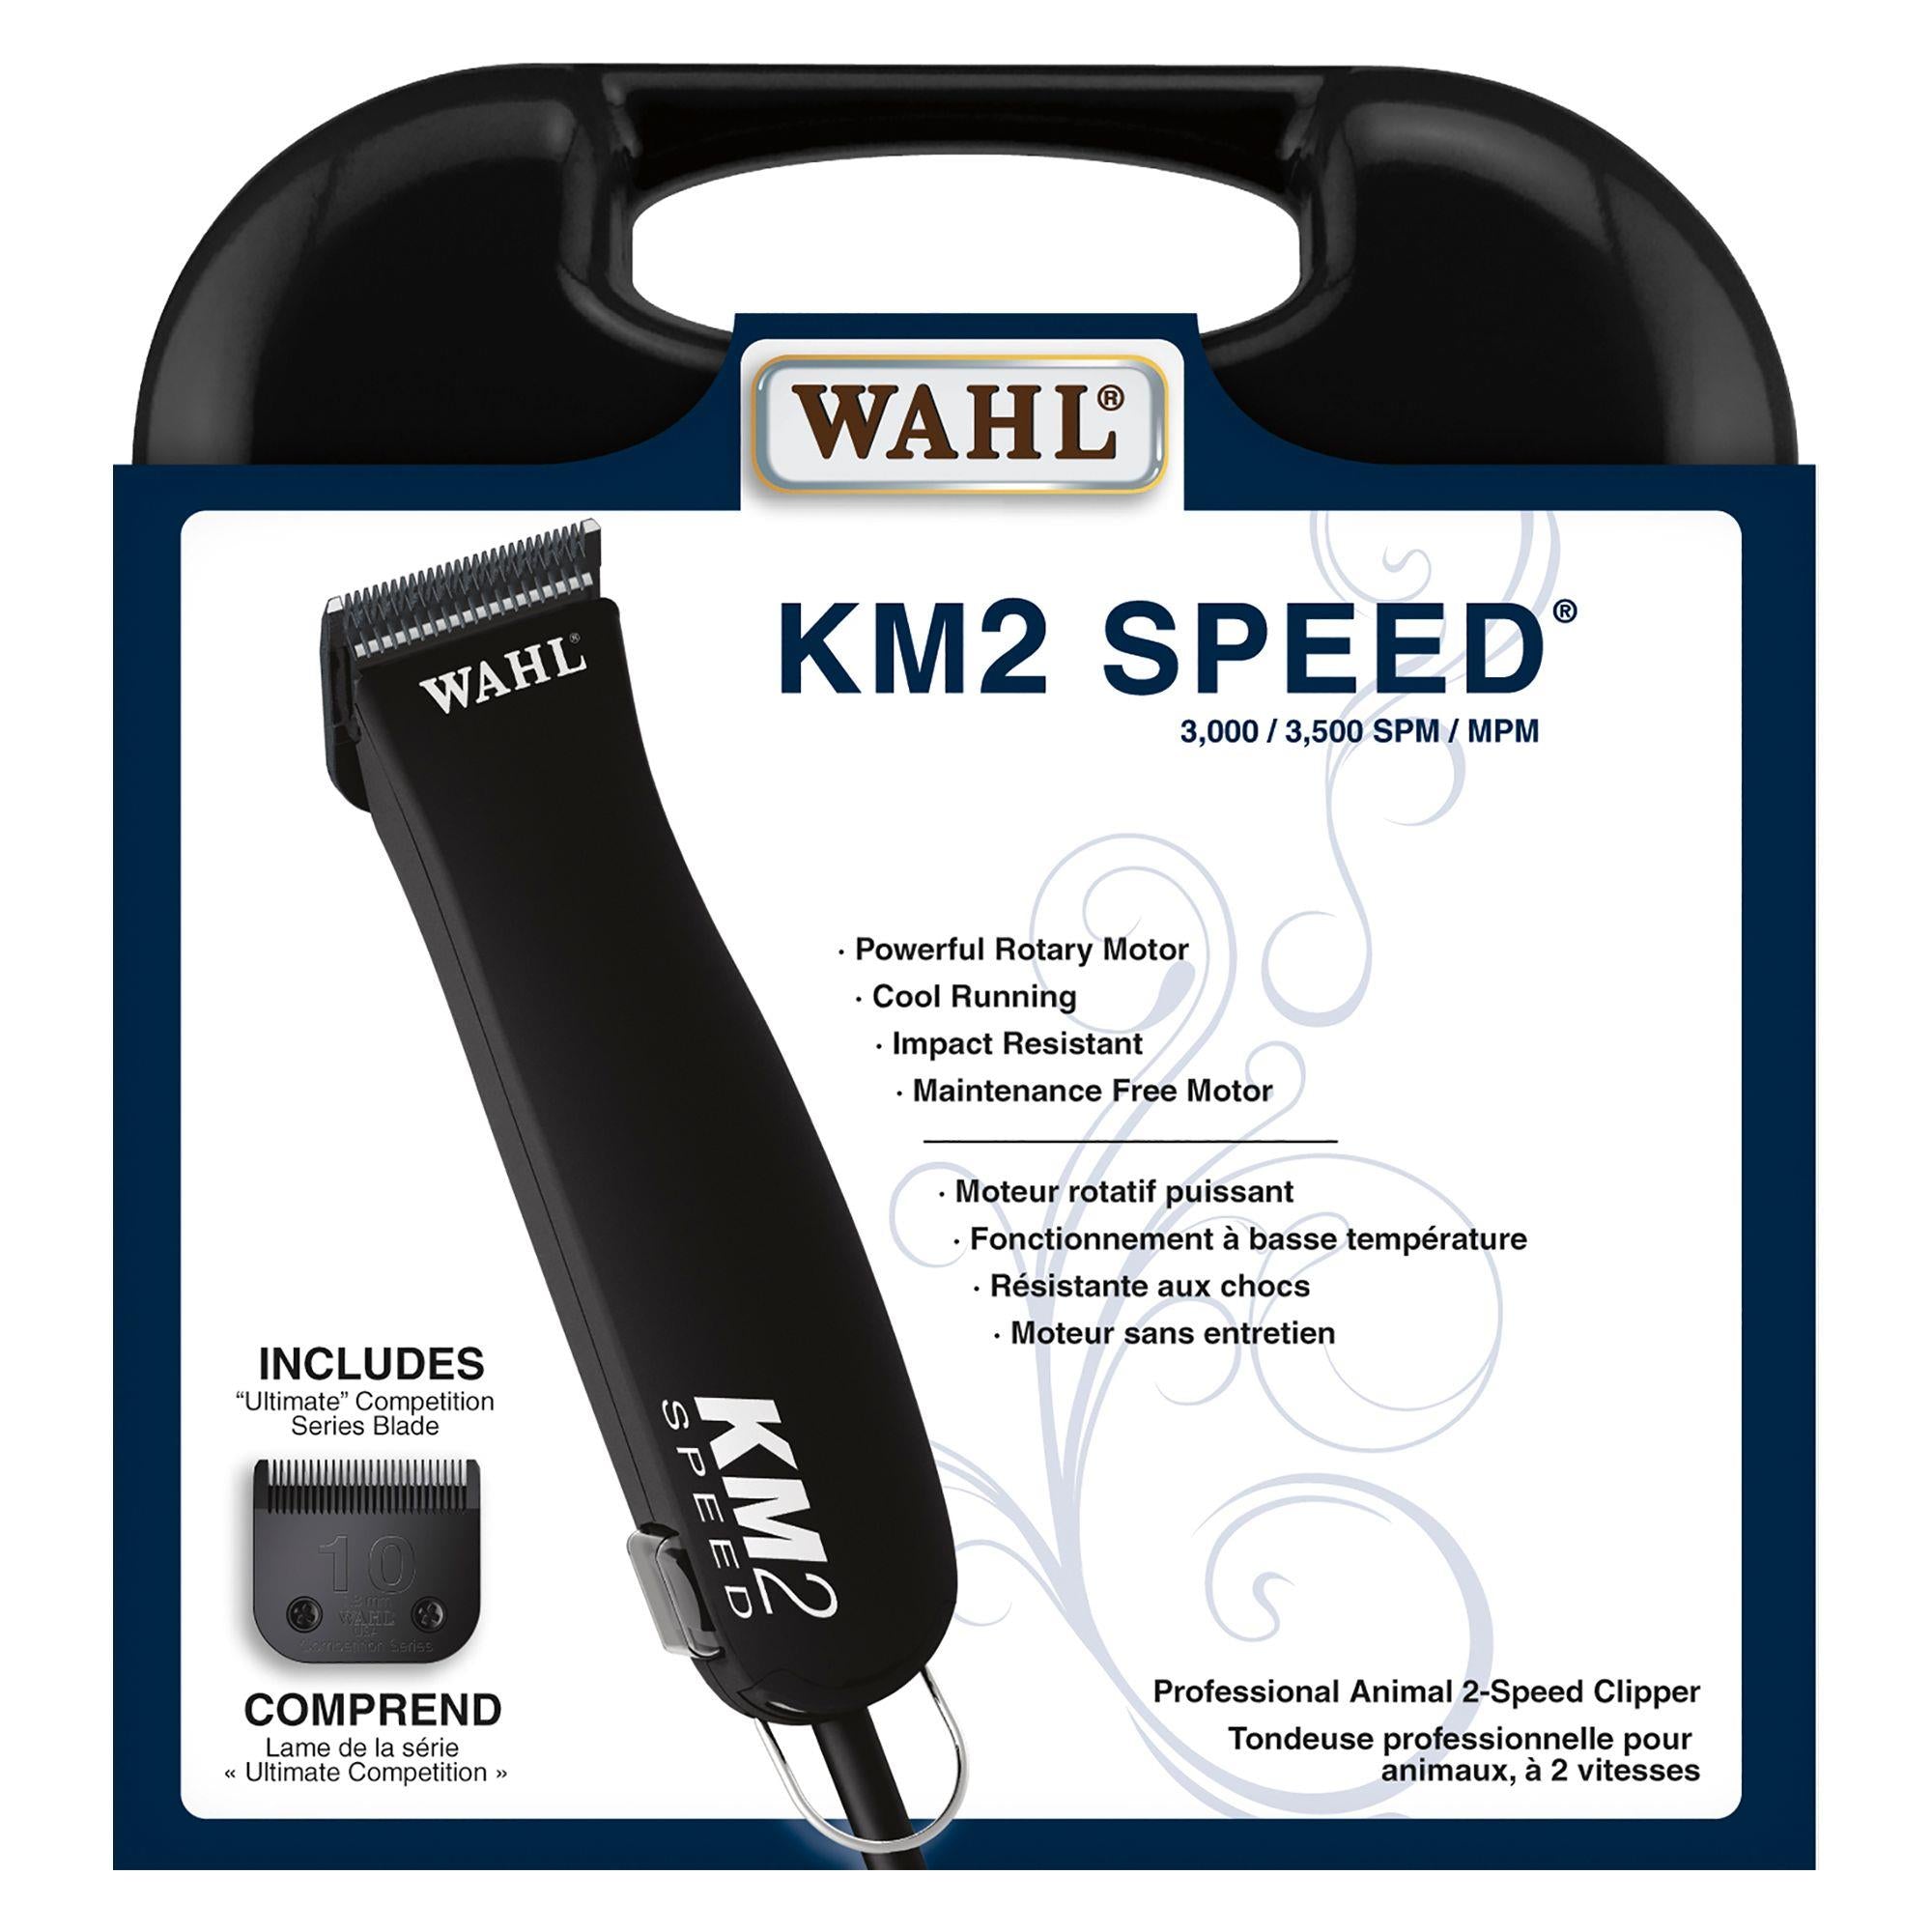 wahl km2 speed